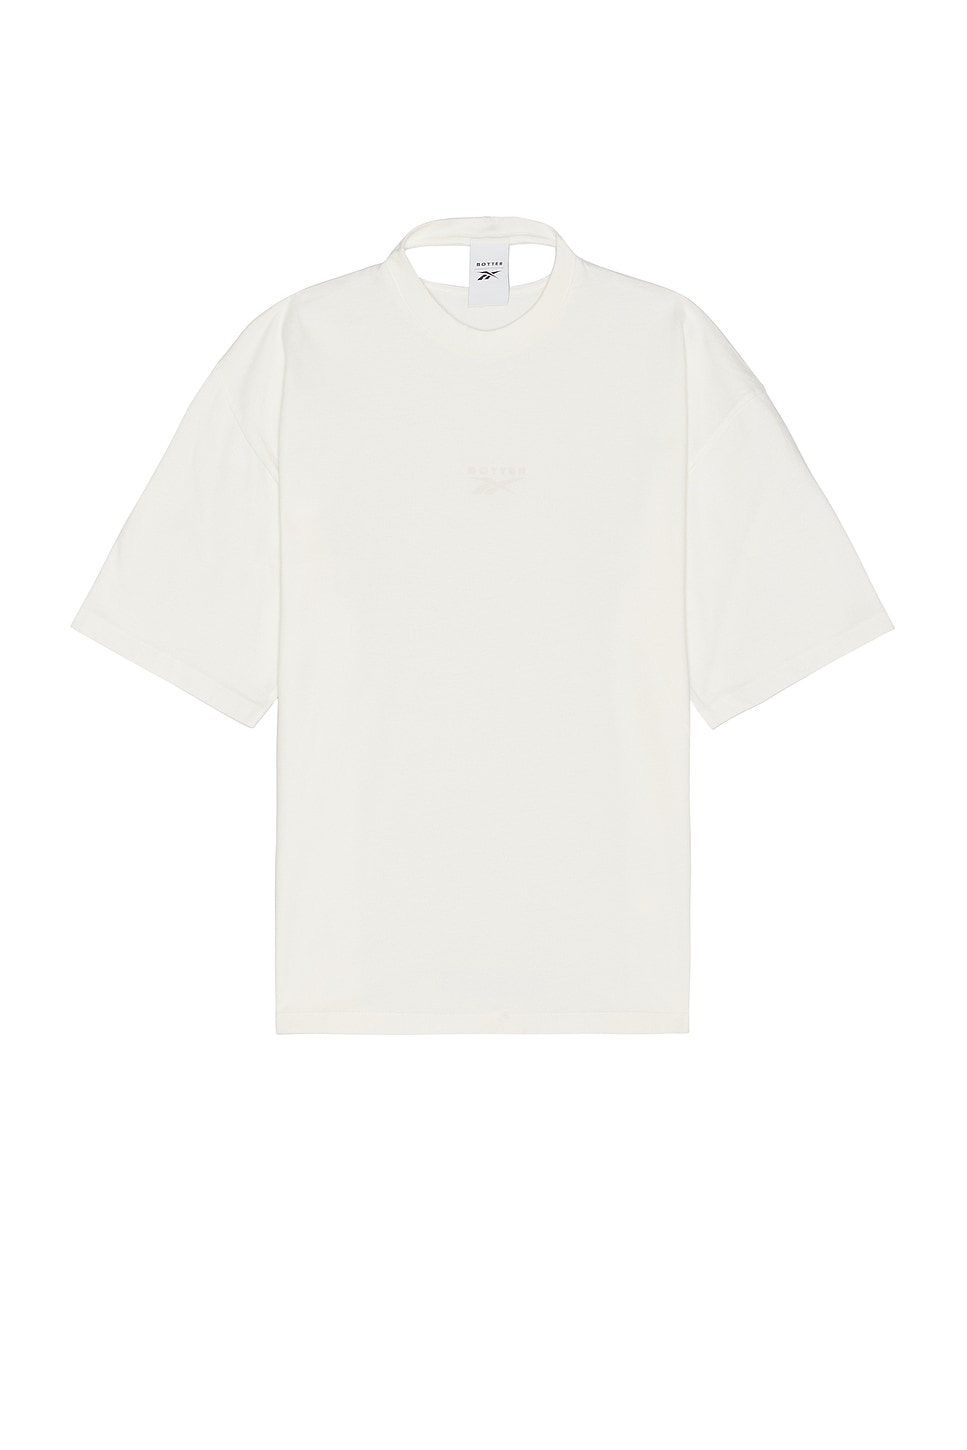 Image 1 of BOTTER x Reebok Short Sleeve T-shirt in Off White